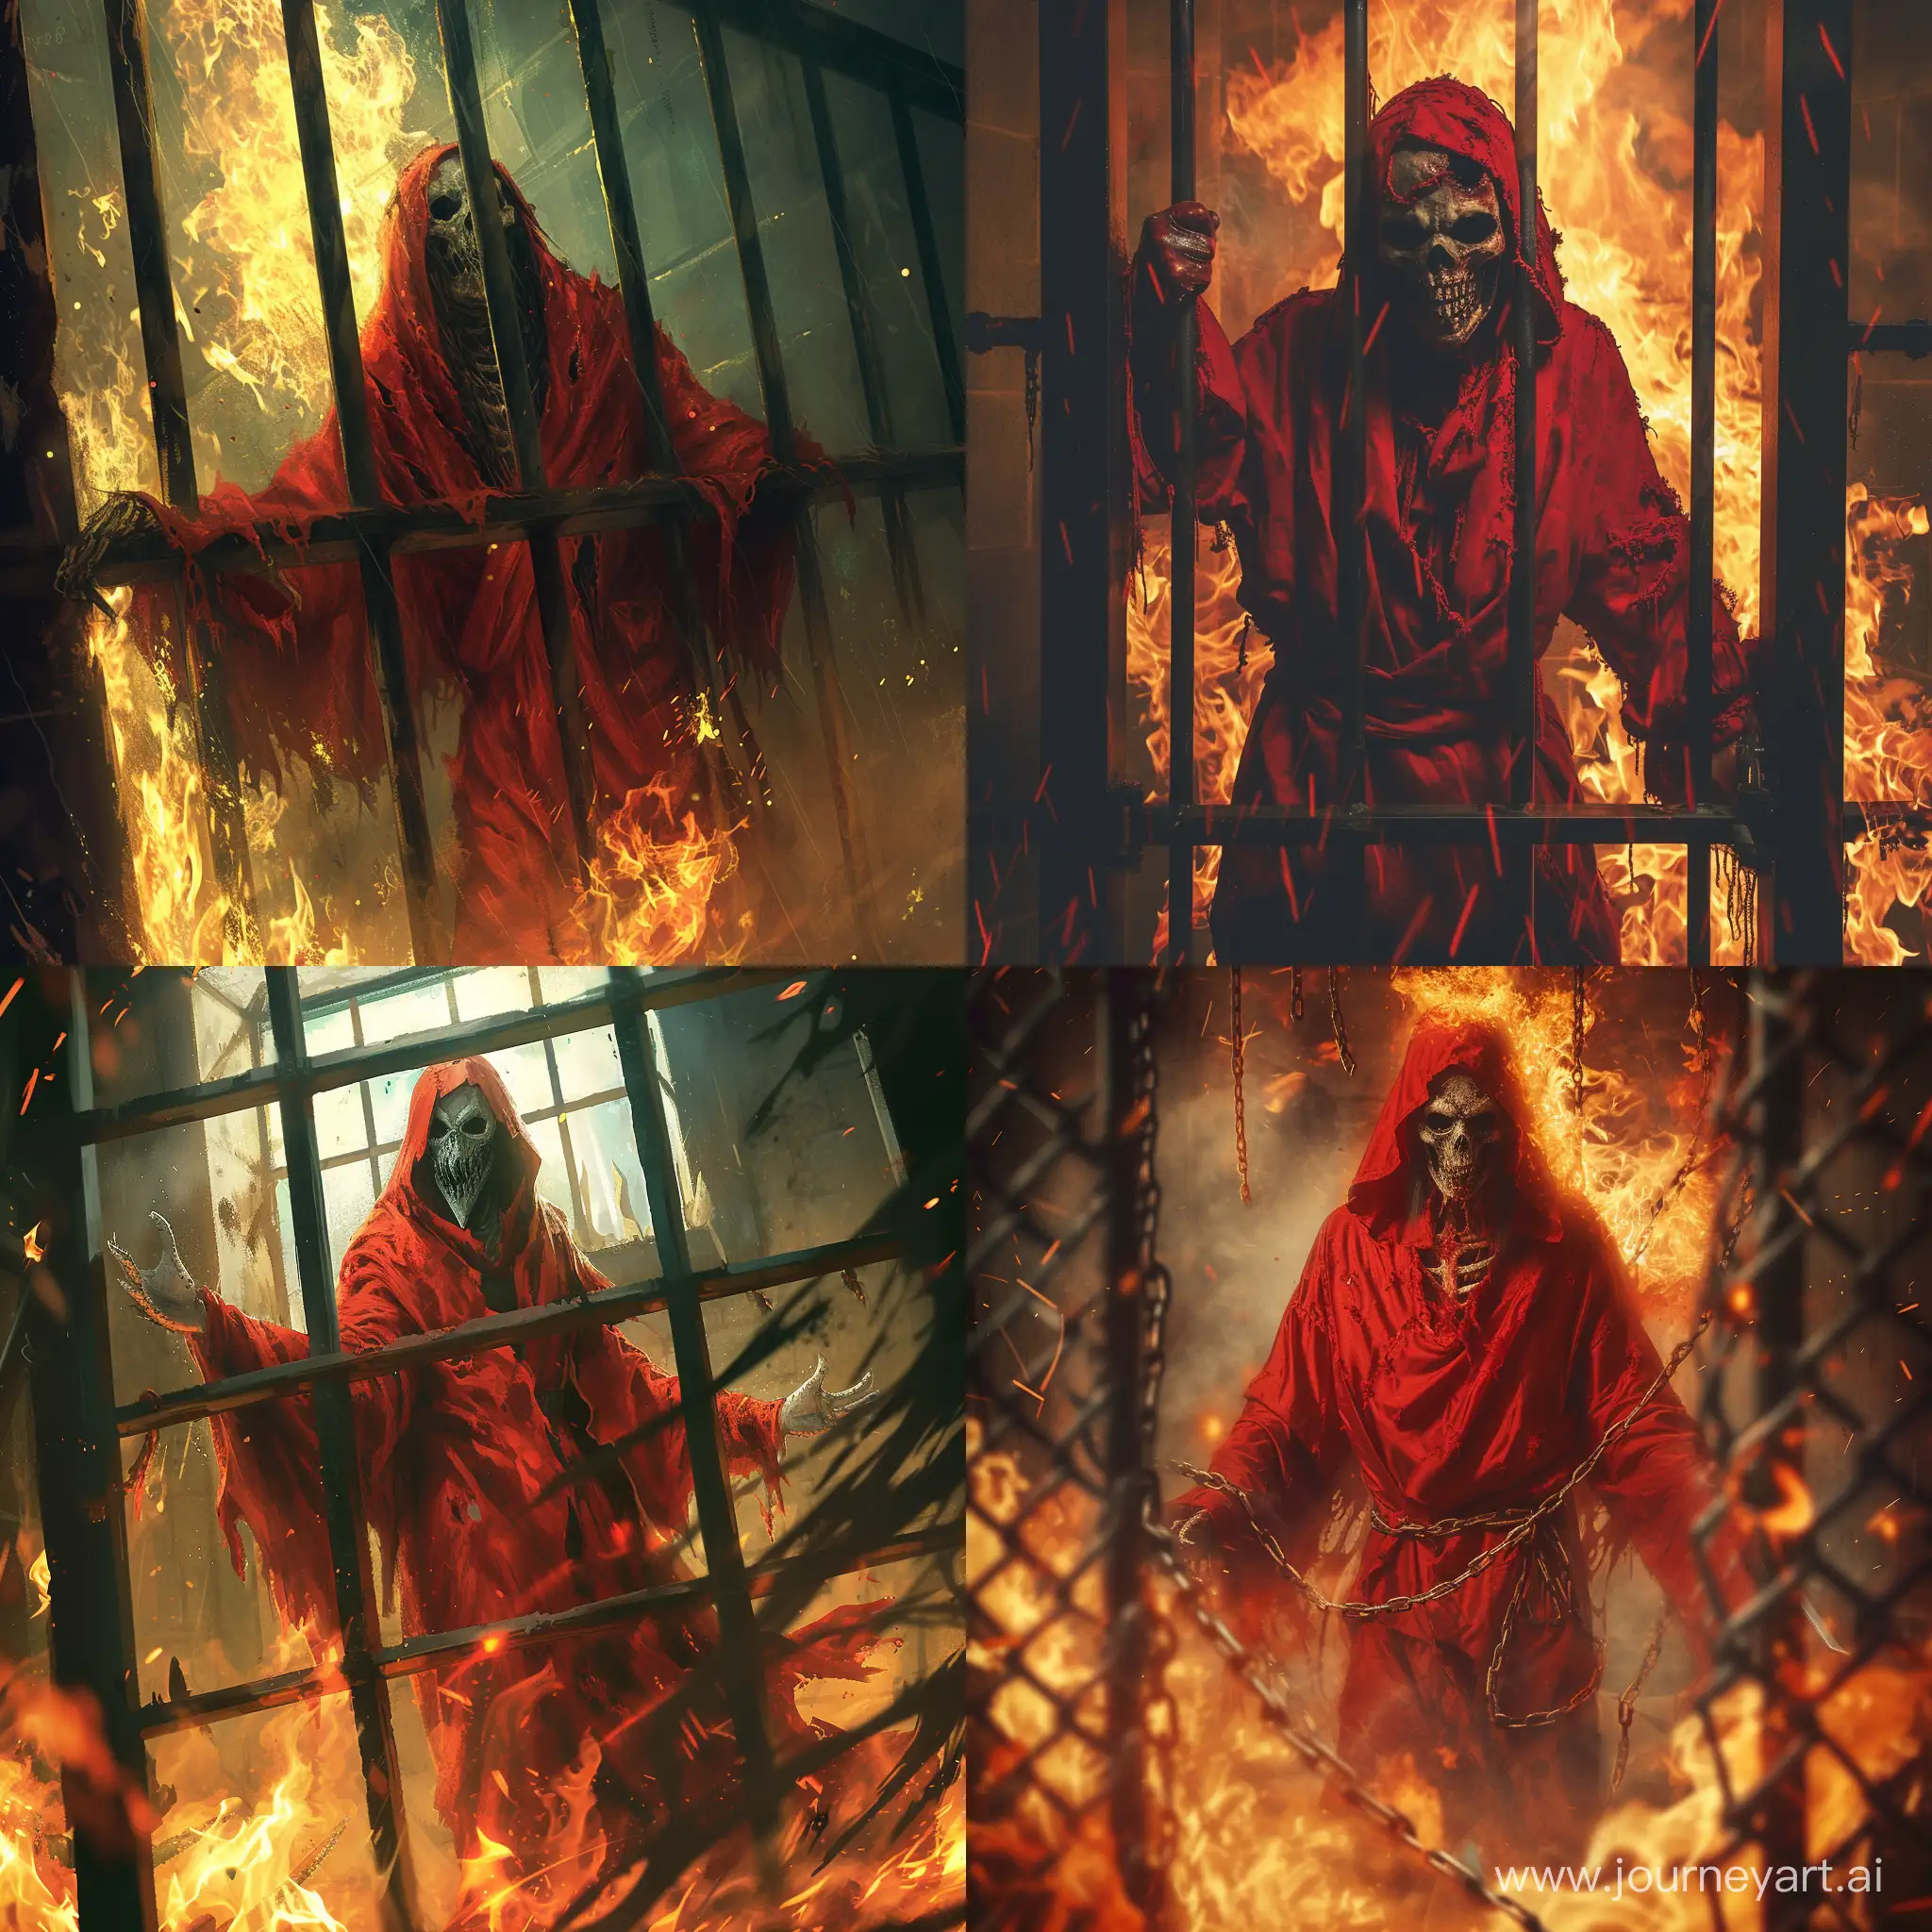 Eerie-Grim-Reaper-Zombie-in-Flaming-Prison-with-Menacing-Plague-Mask